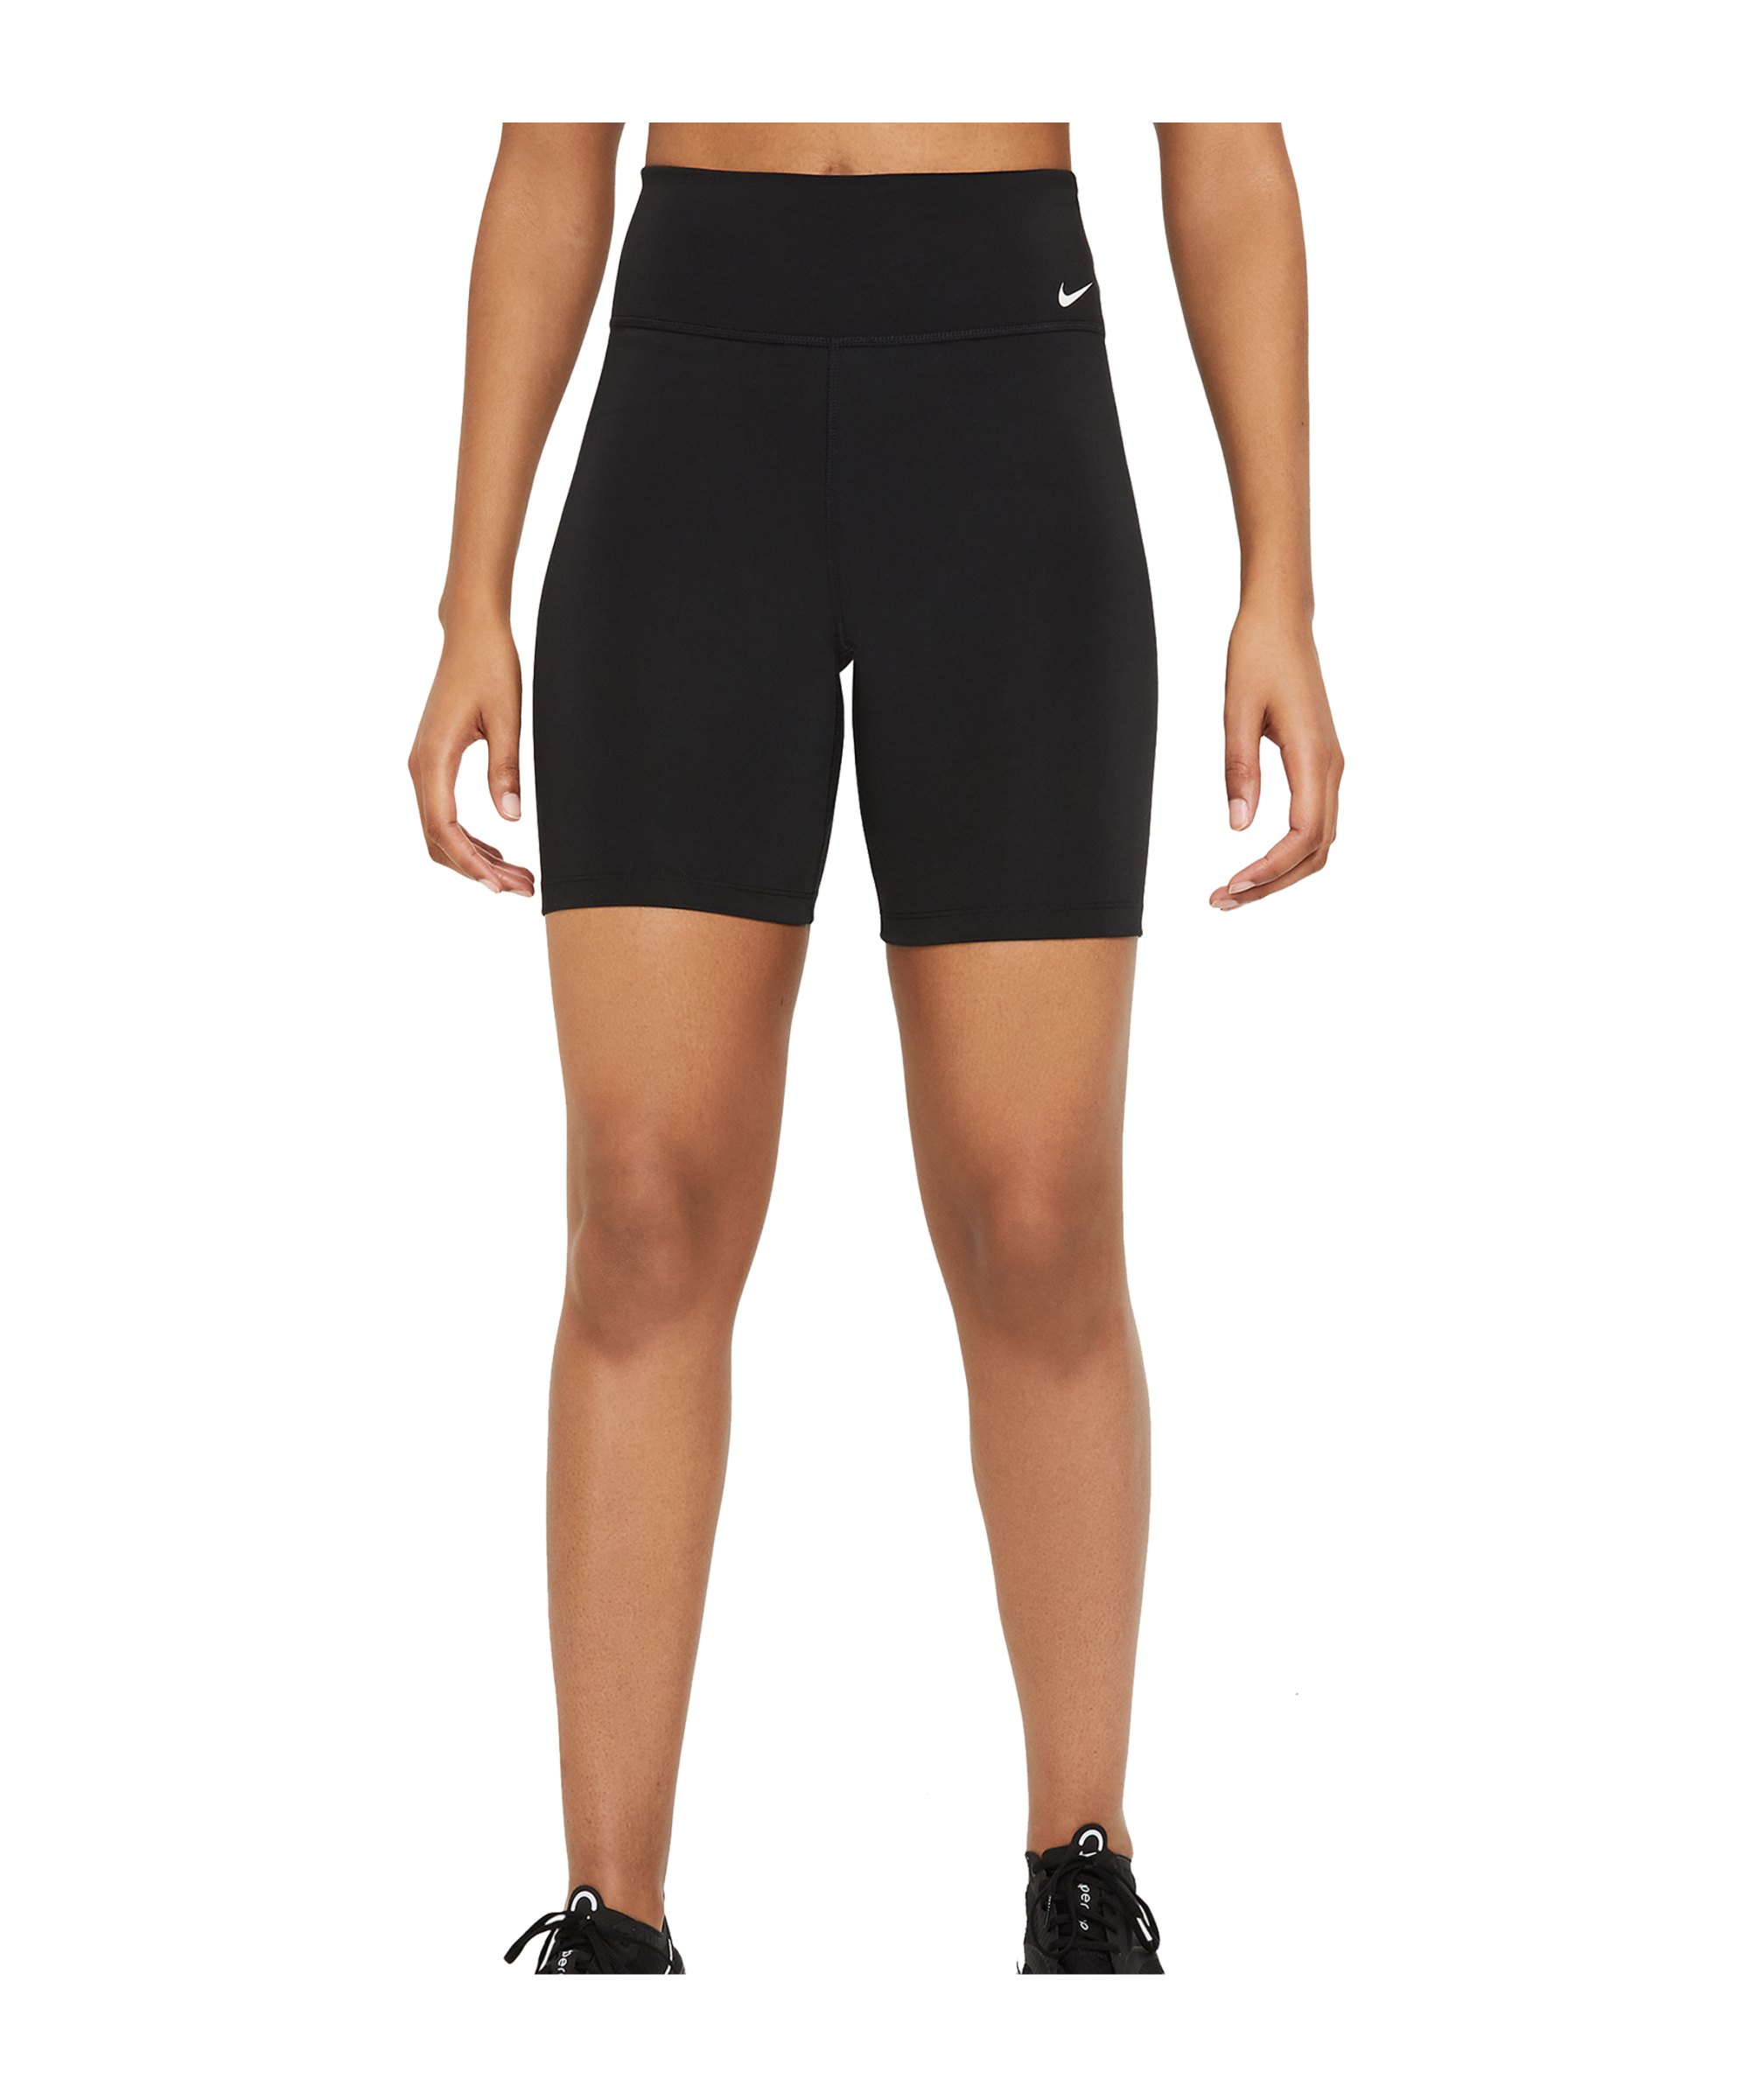 Nike Mid Rise Bike Short Damen Schwarz Weiss F010 - schwarz